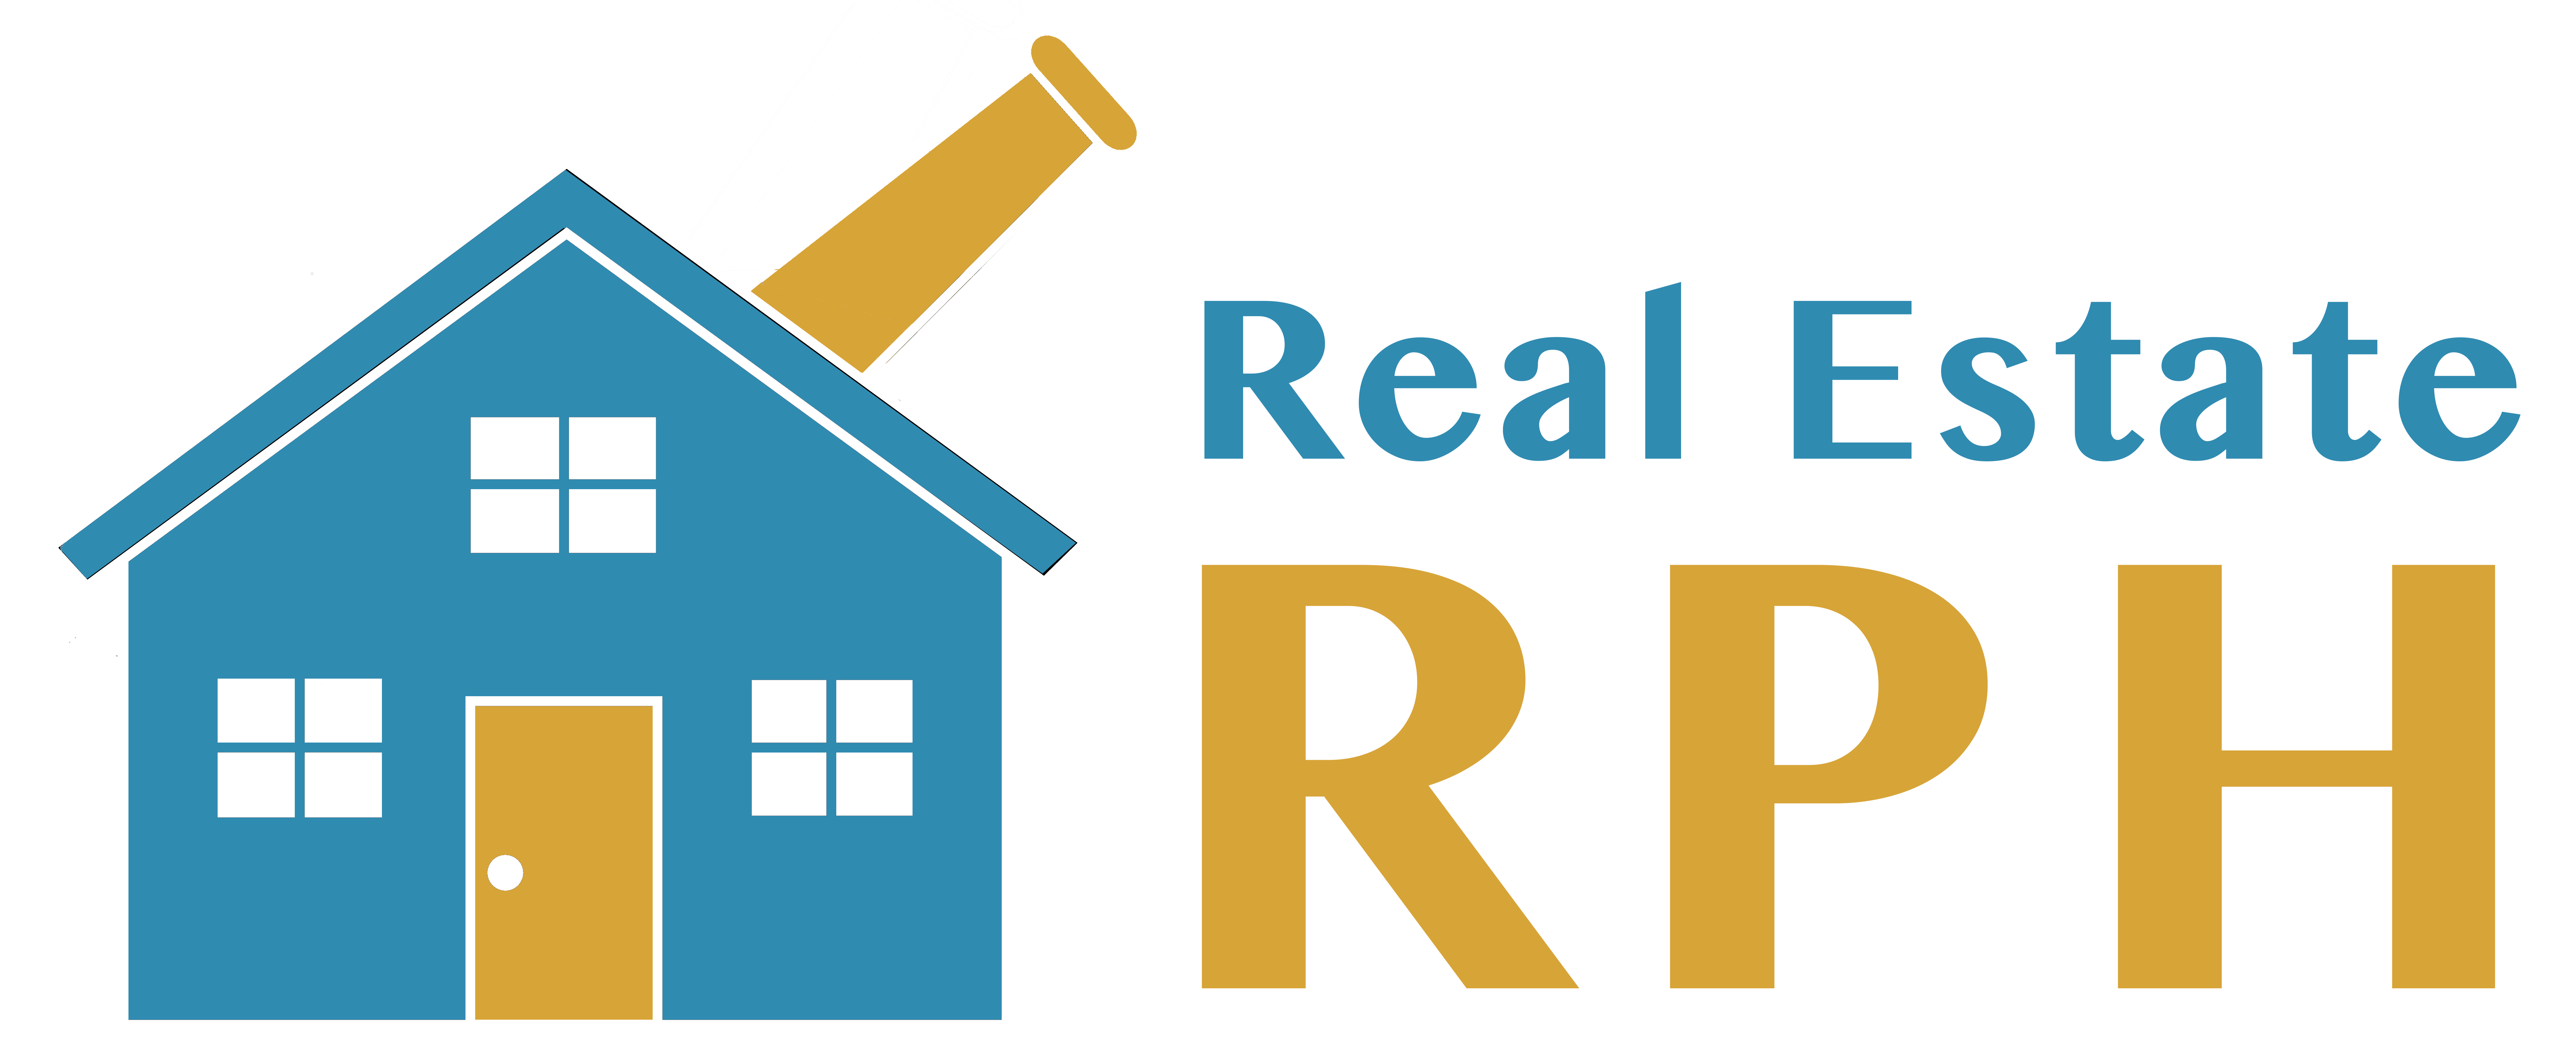 RPh Logo - Real Estate RPH